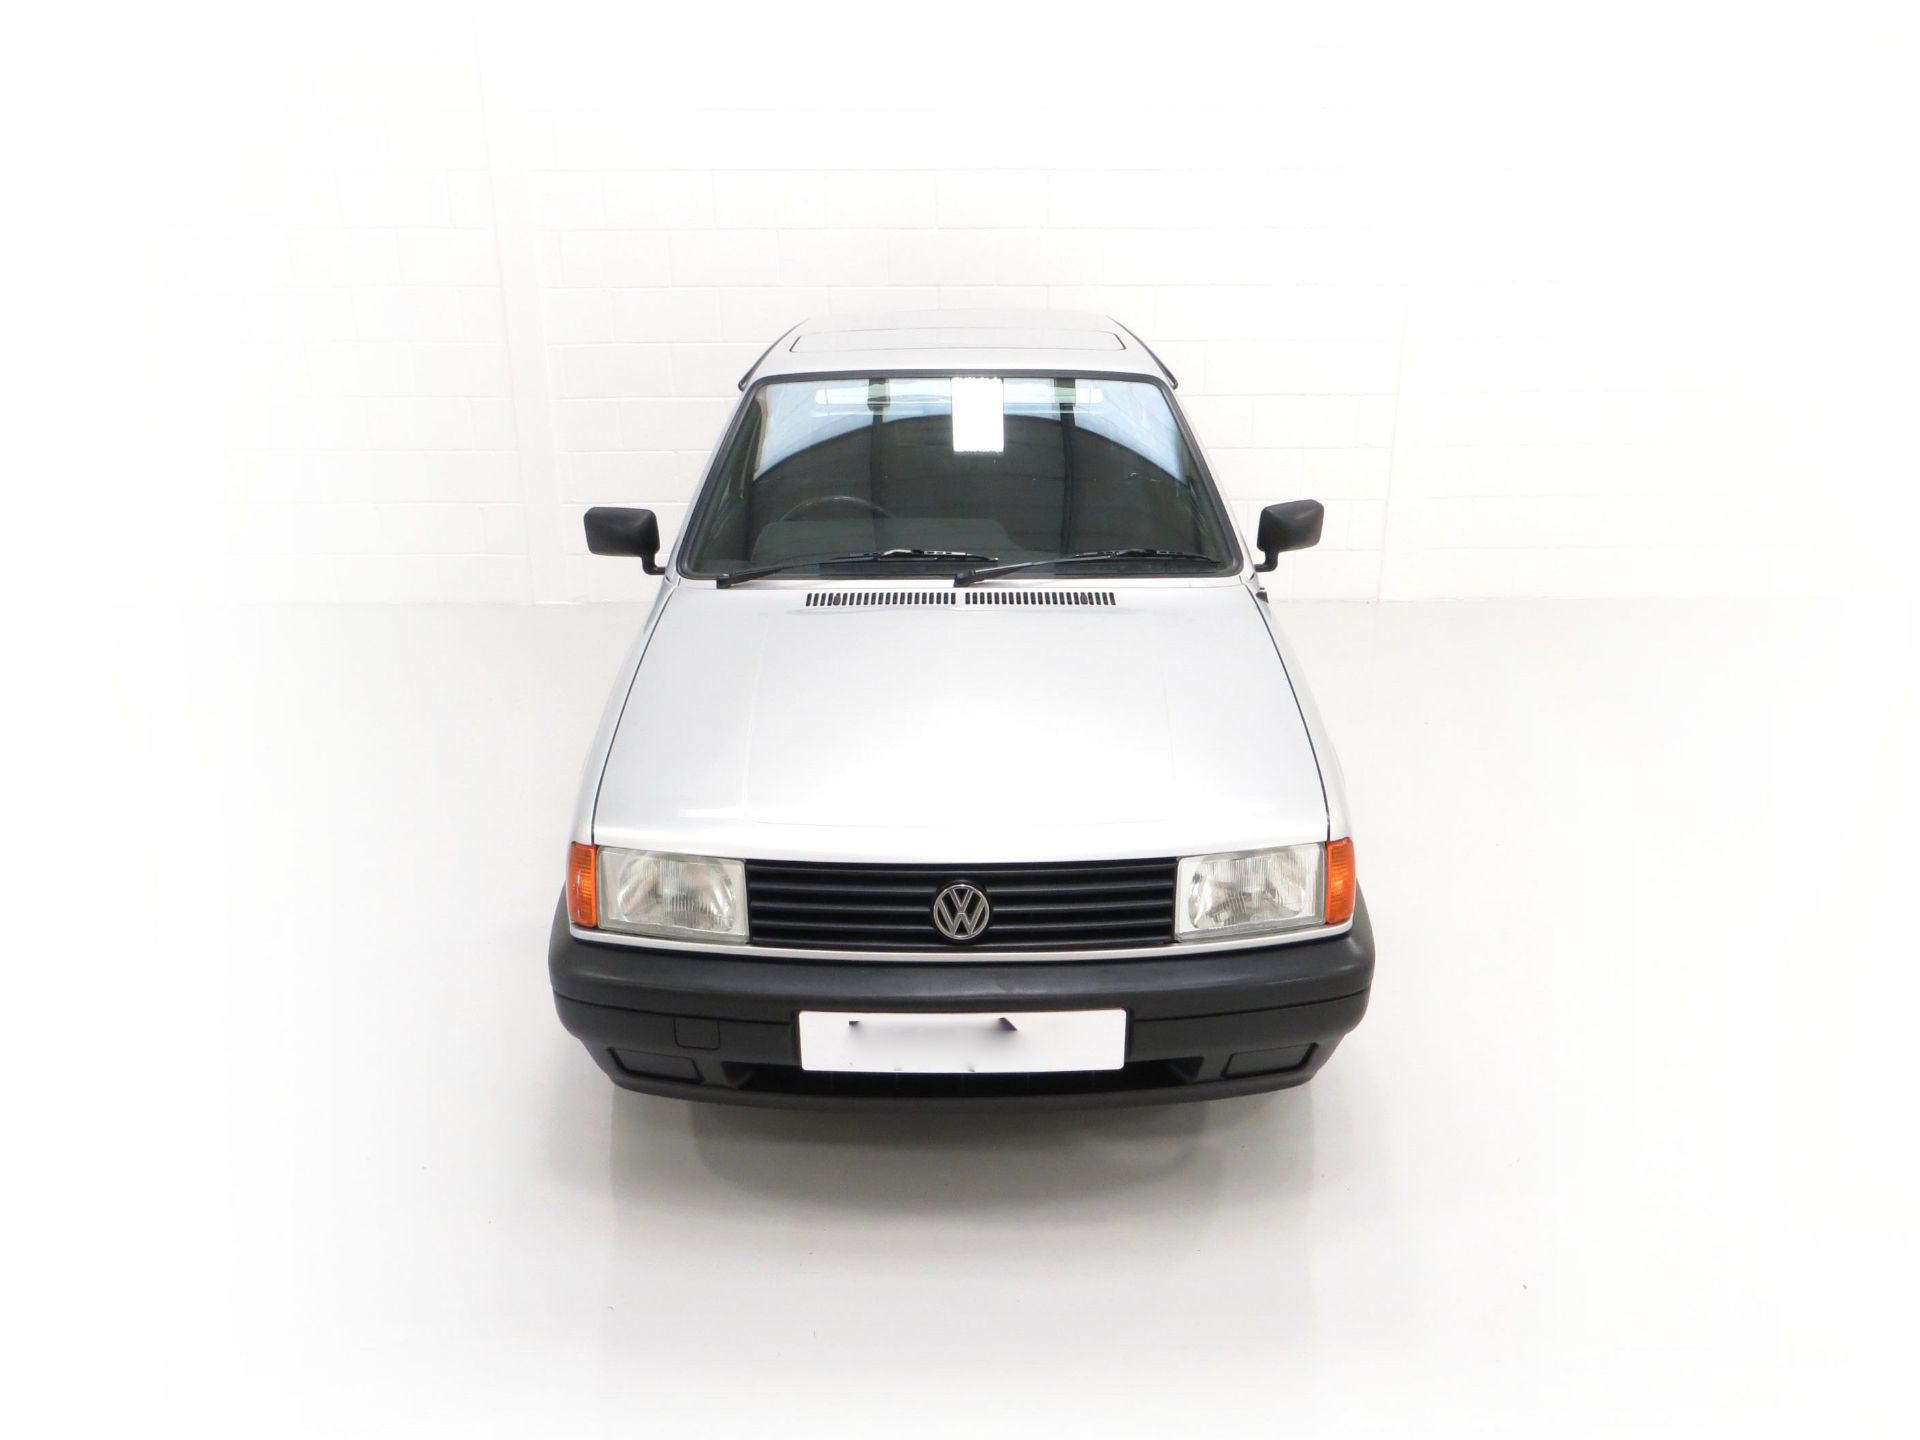 1992 Volkswagen Polo Mk2F Genesis - Image 84 of 86